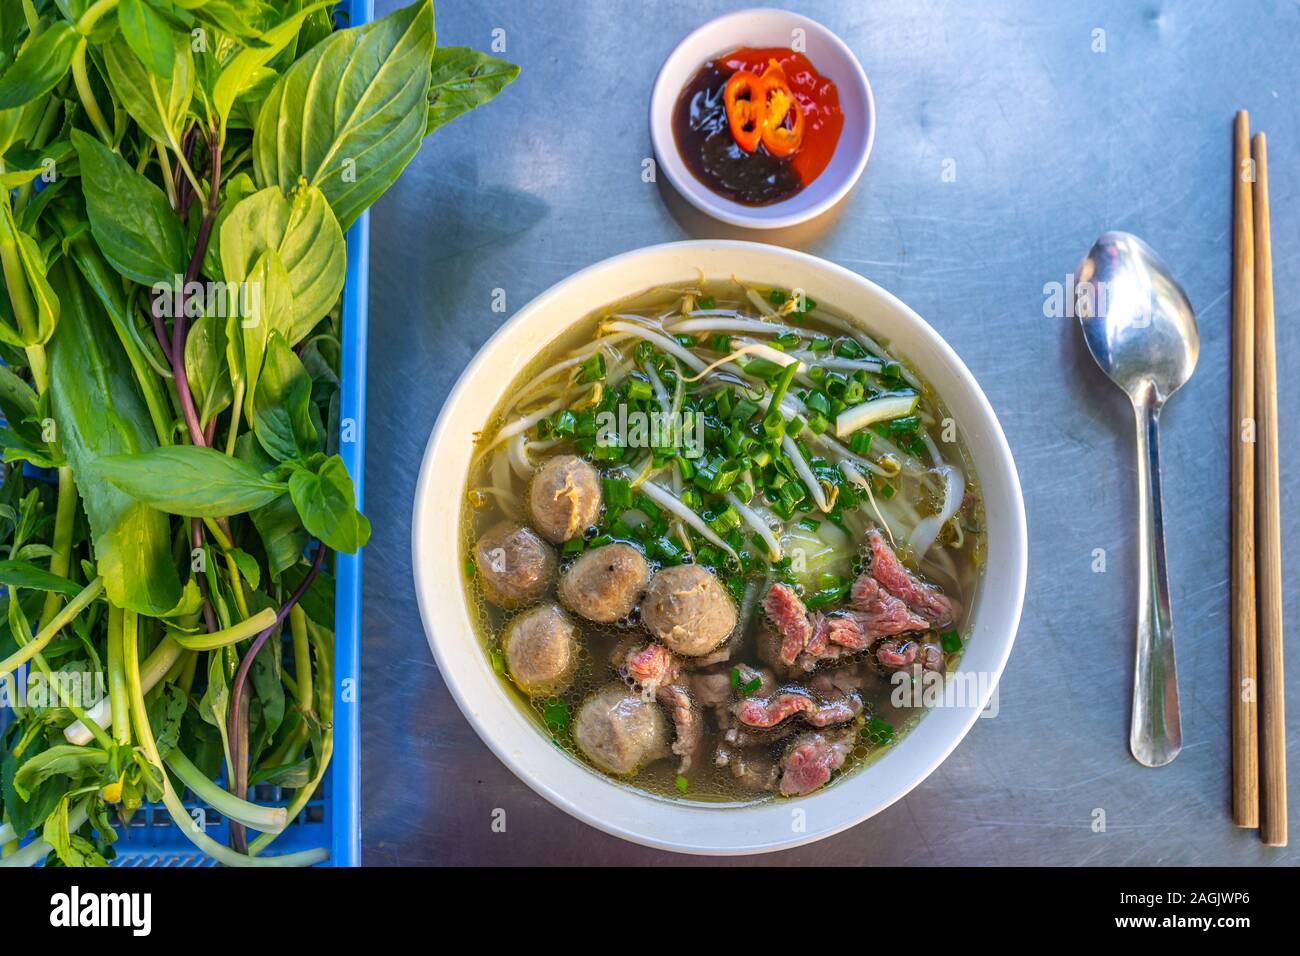 Garnished Vietnamese Pho bowl- beef noodle served with fresh vegetables Stock Photo